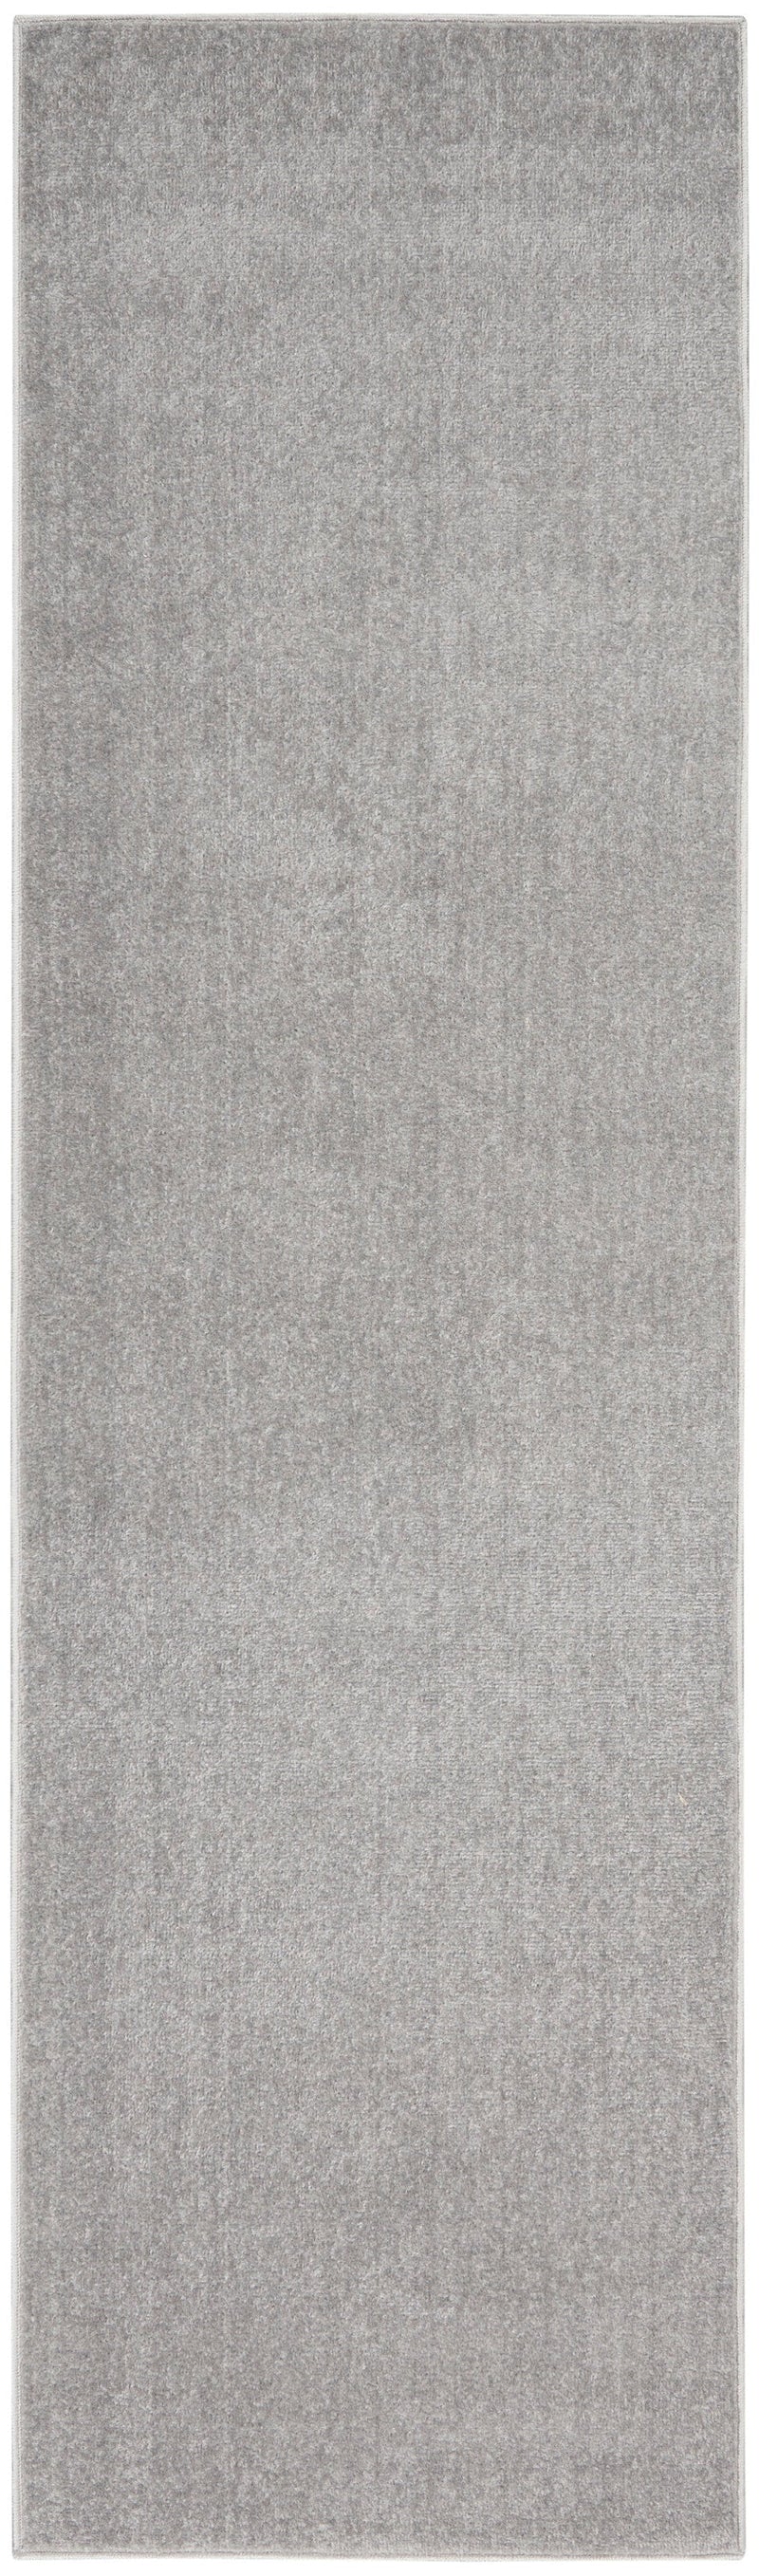 media image for nourison essentials silver grey rug by nourison 99446062369 redo 4 249